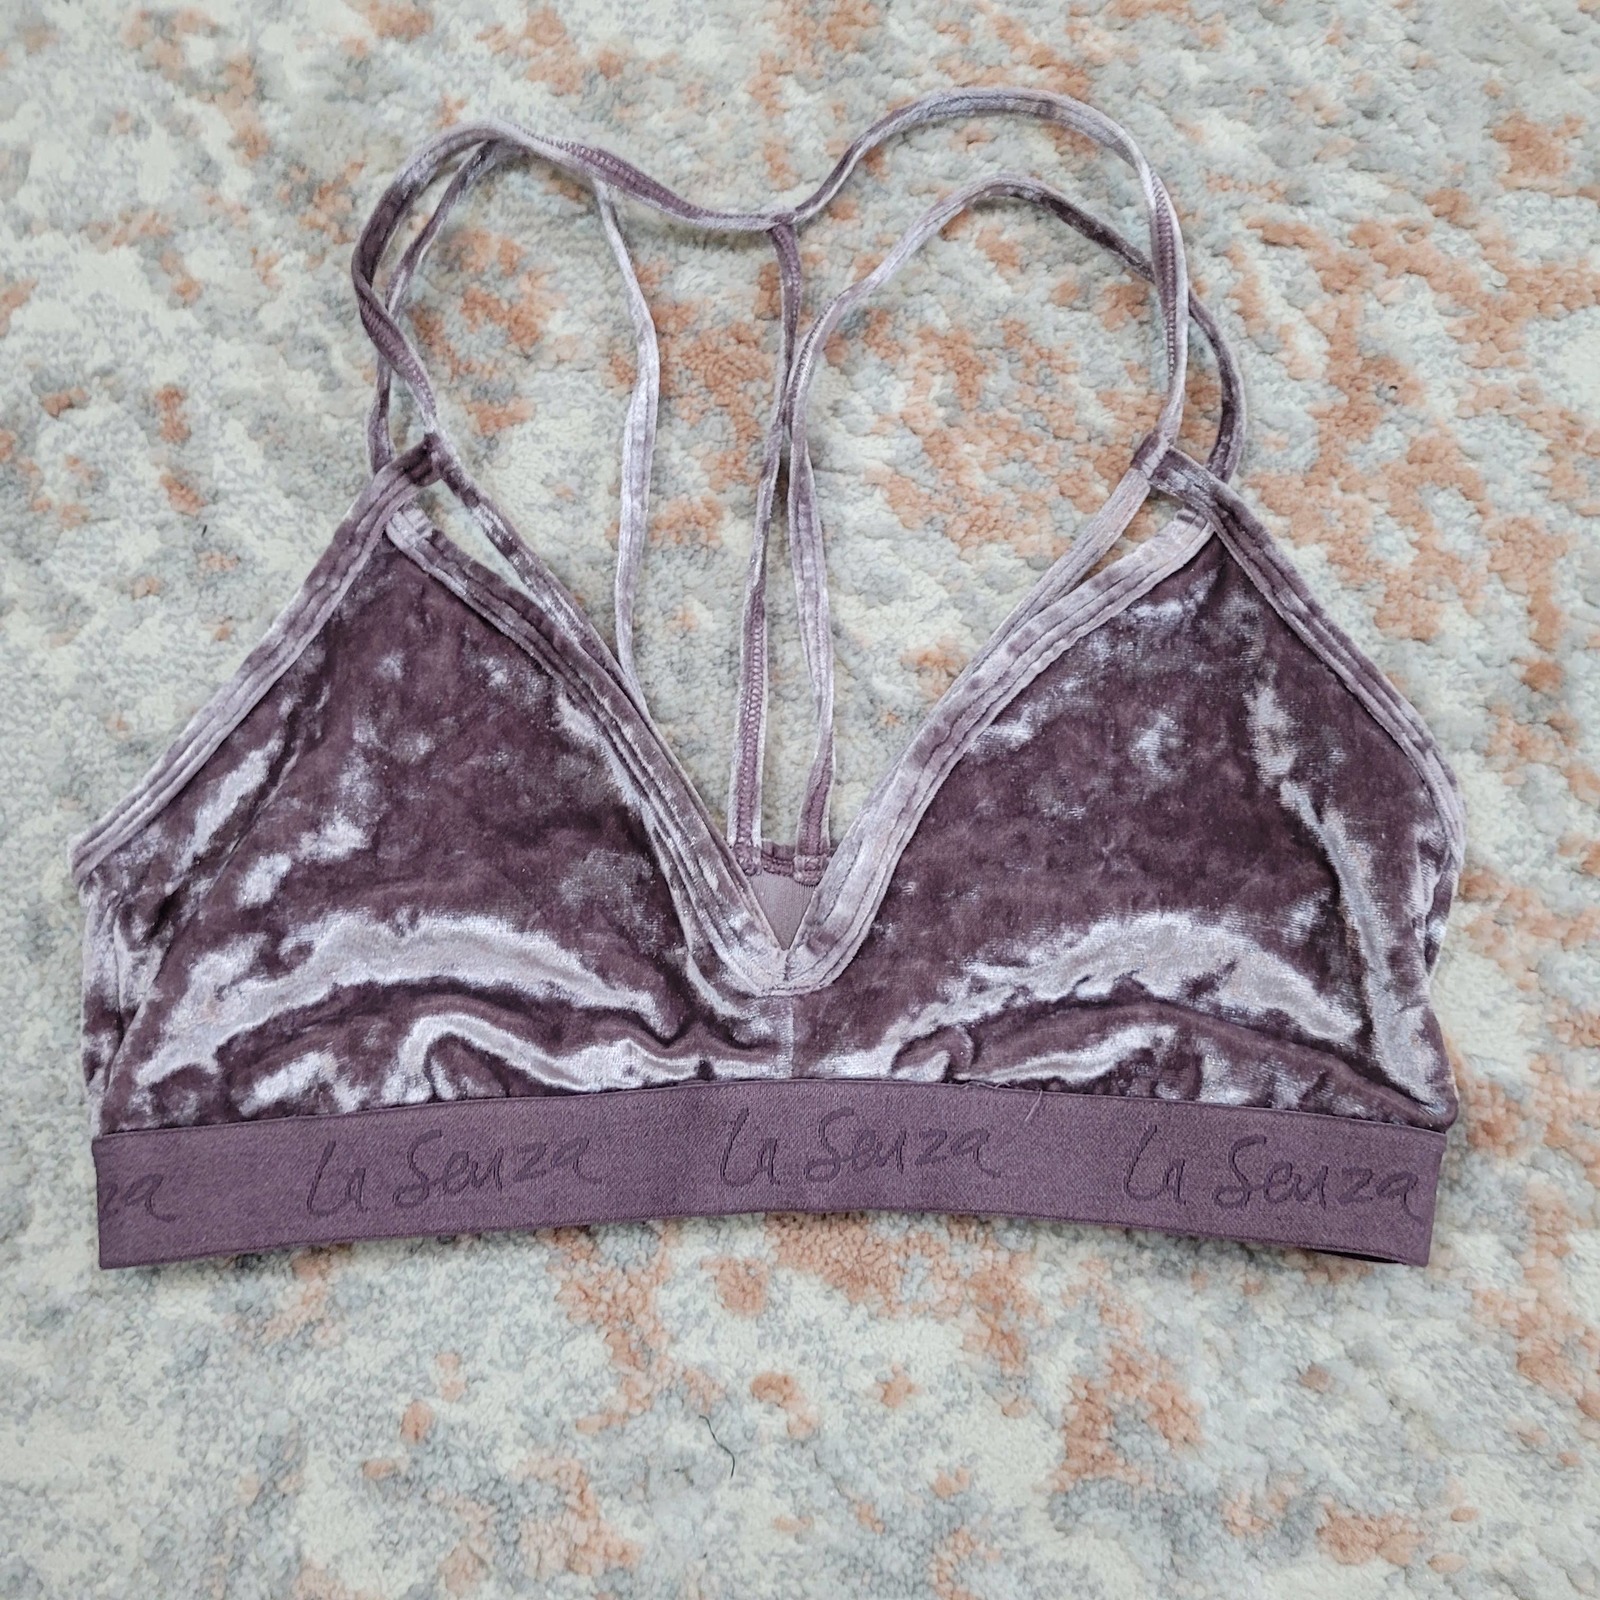 La Senza Purple Velvet Bralette - Size Medium and 43 similar items